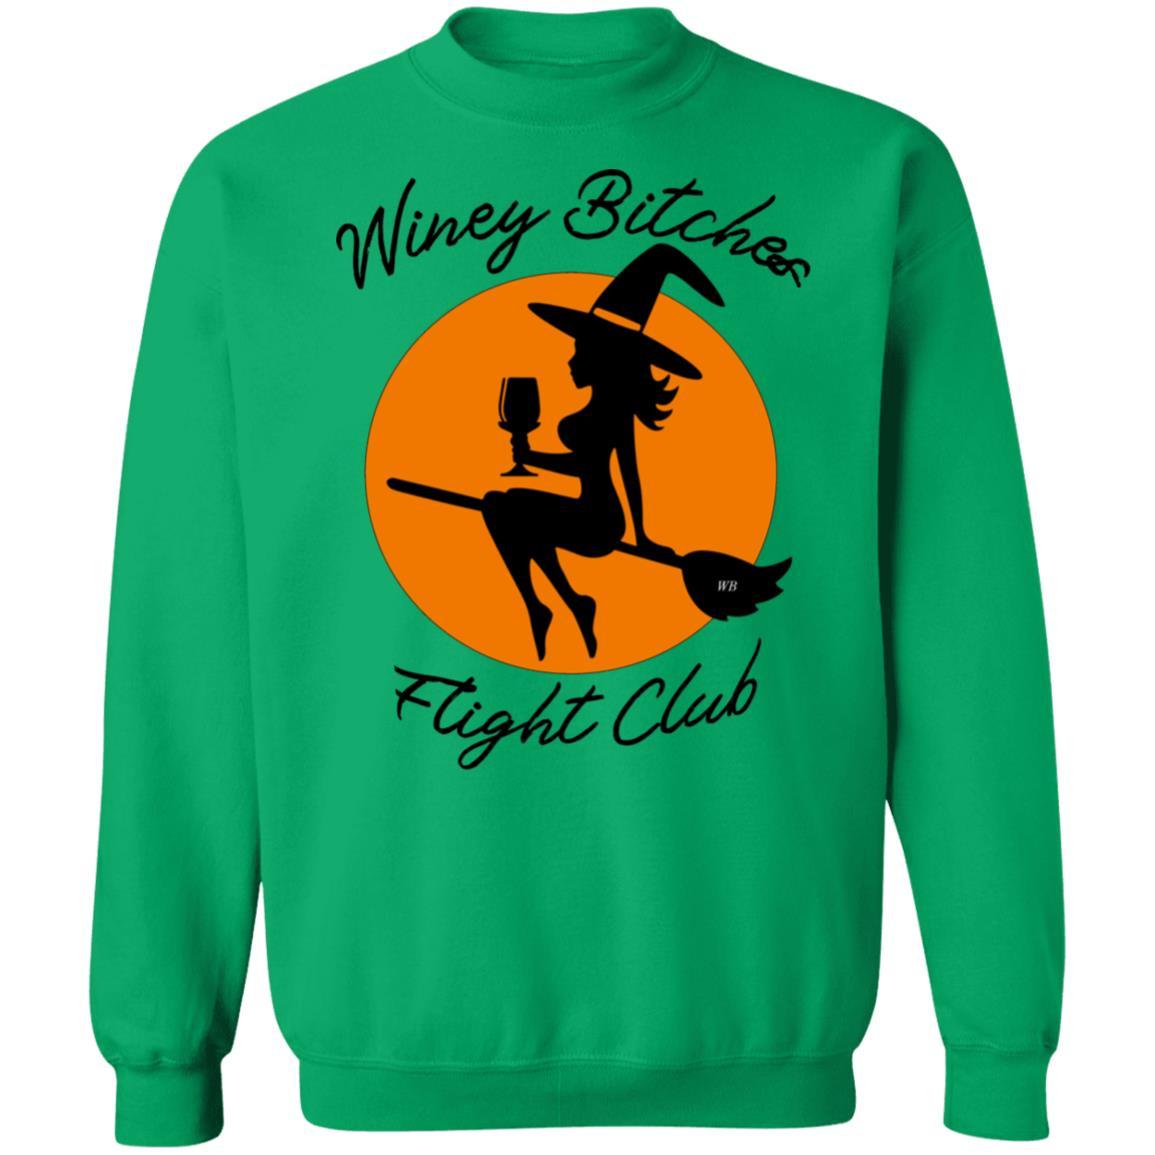 Sweatshirts Irish Green / S WineyBitches.Co "Winey Bitches Flight Club"Crewneck Pullover Sweatshirt  8 oz. WineyBitchesCo